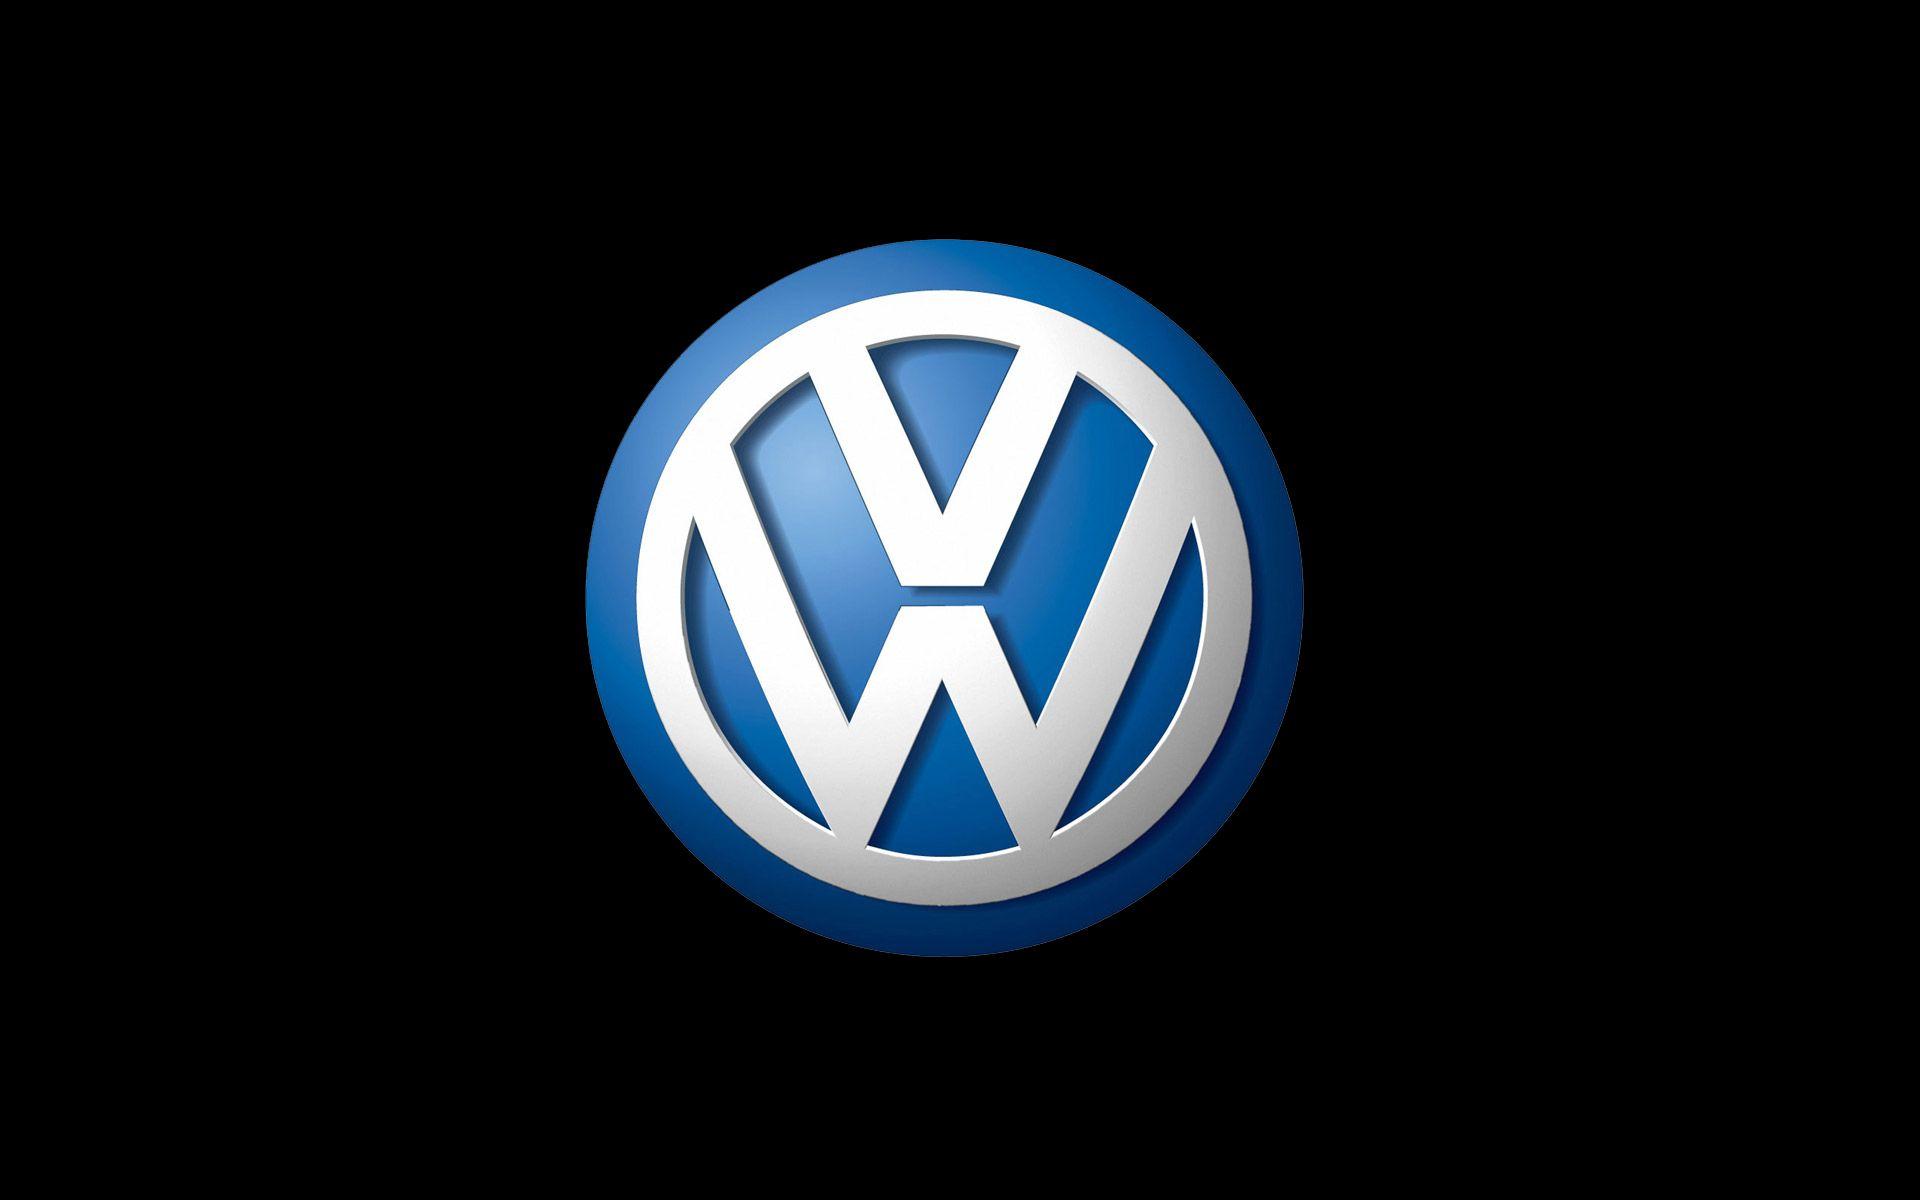 Volswagon Logo - 49+] Volkswagen Logo Wallpaper on WallpaperSafari